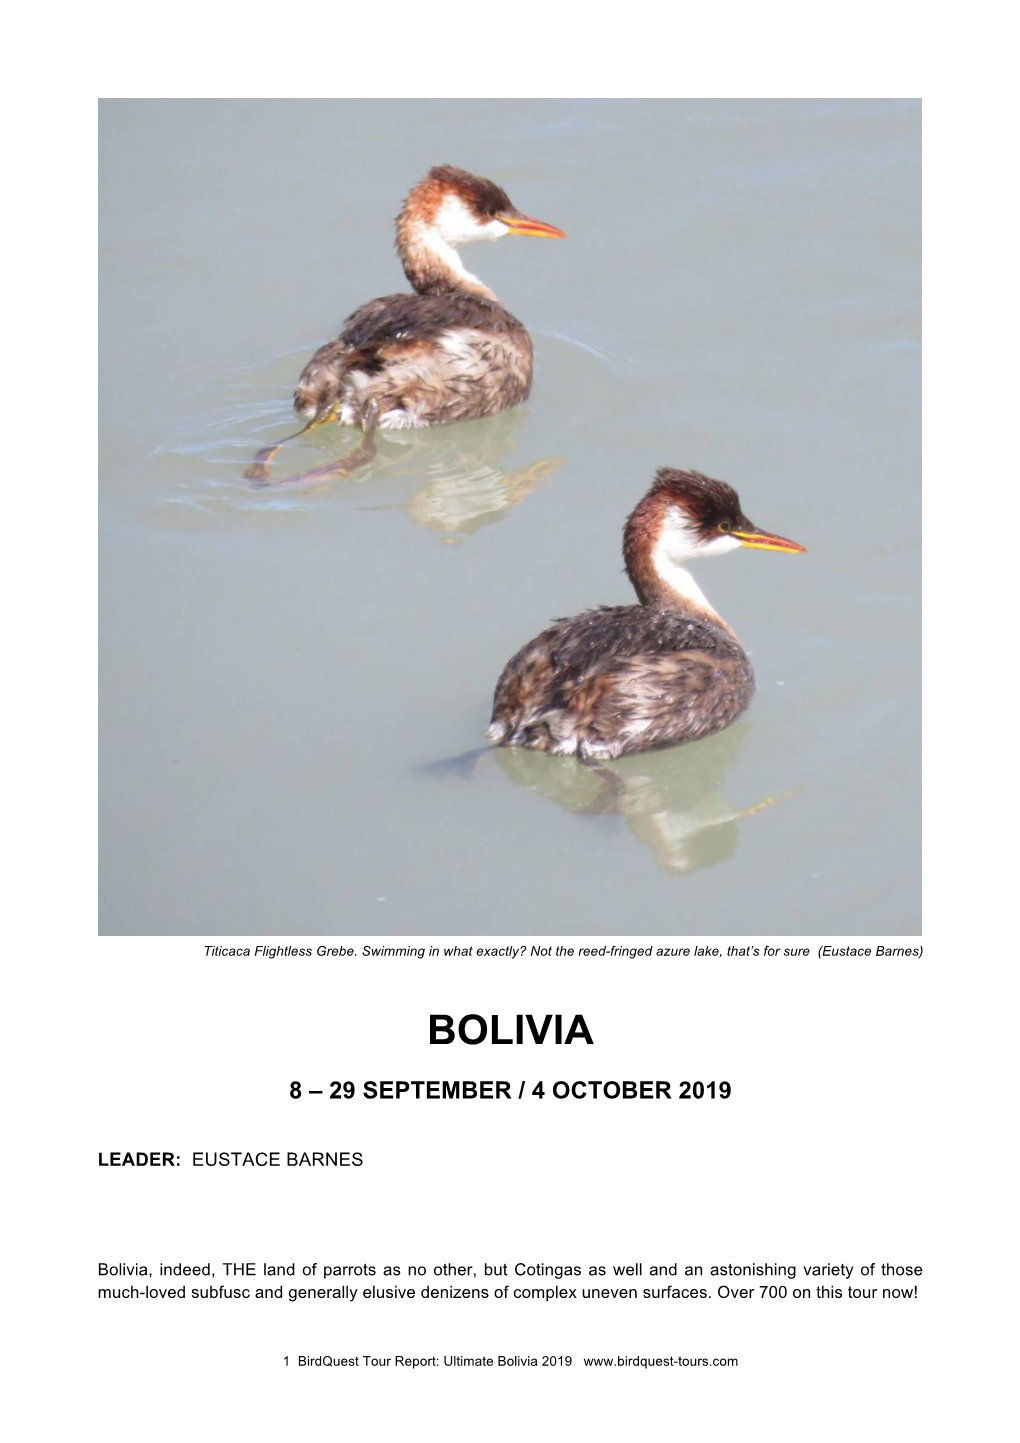 Ultimate Bolivia Tour Report 2019